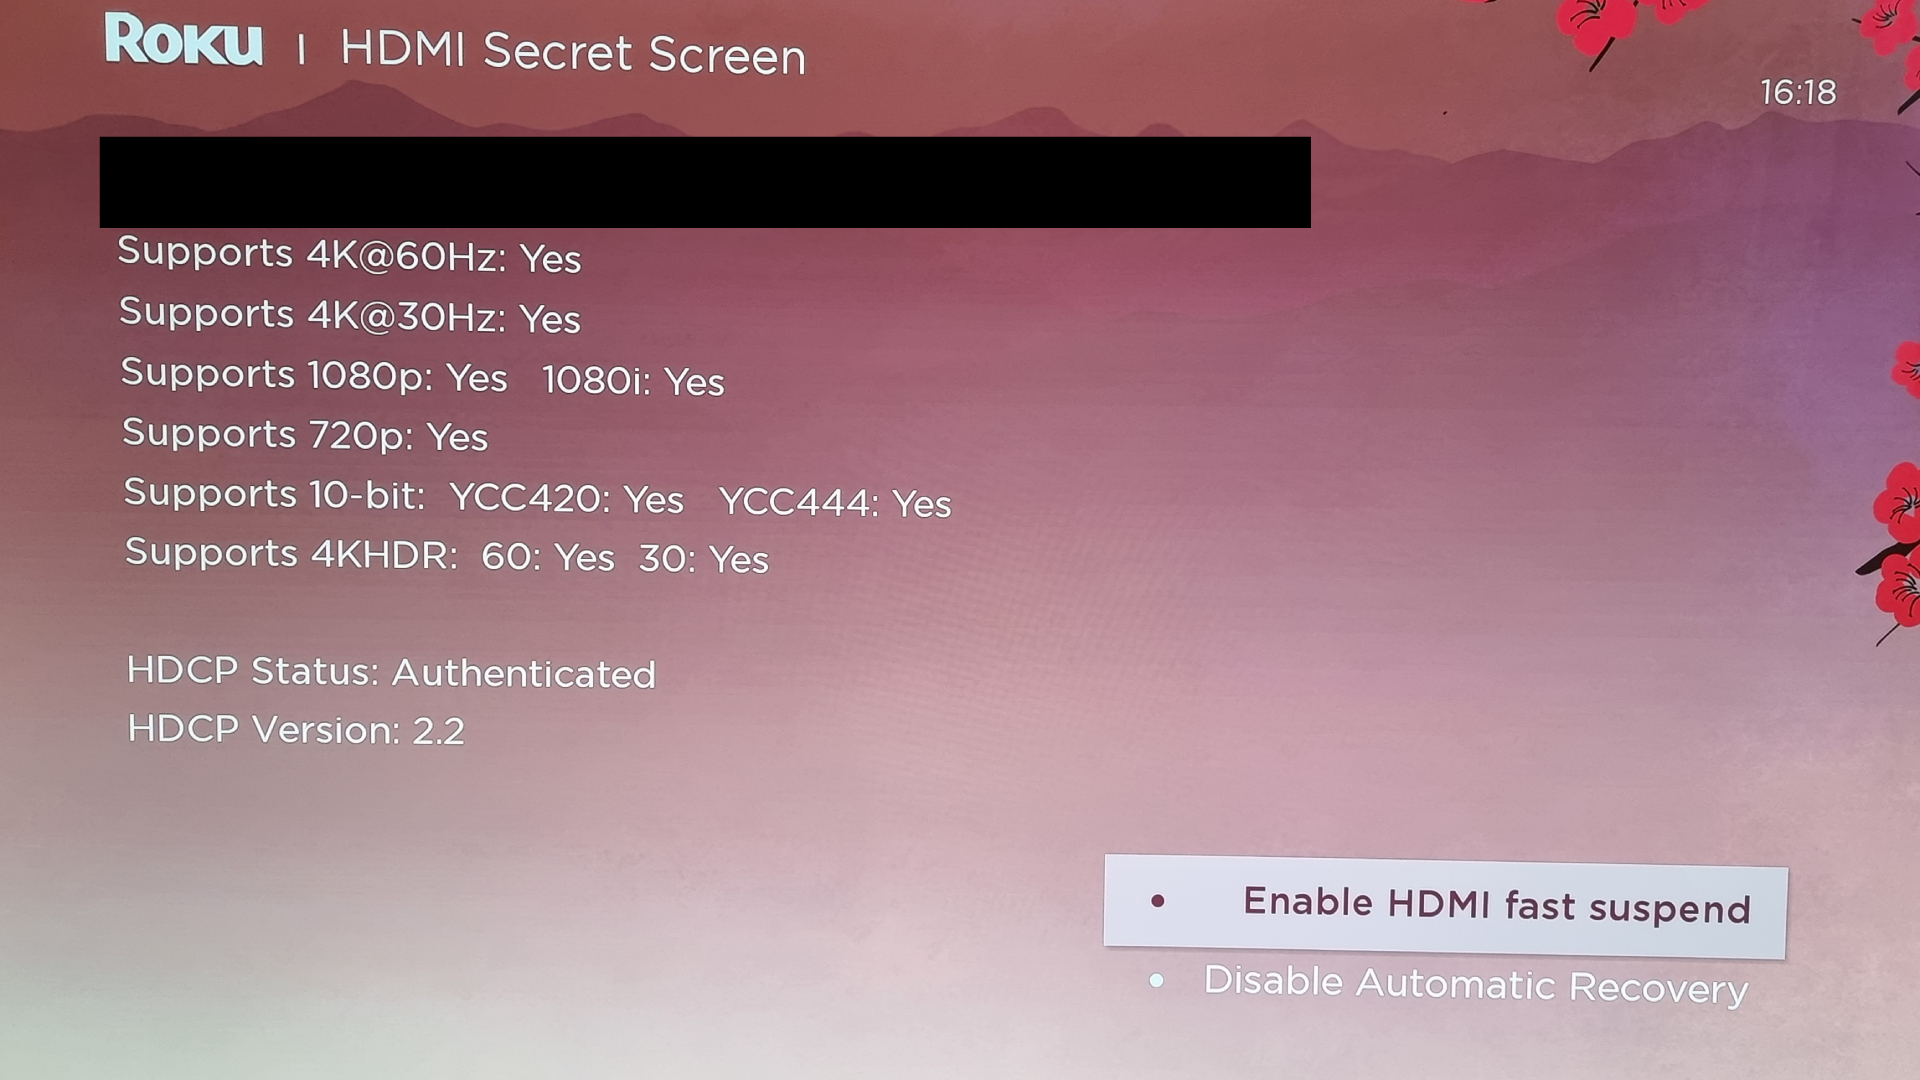 Menu rahasia Roku HDMI